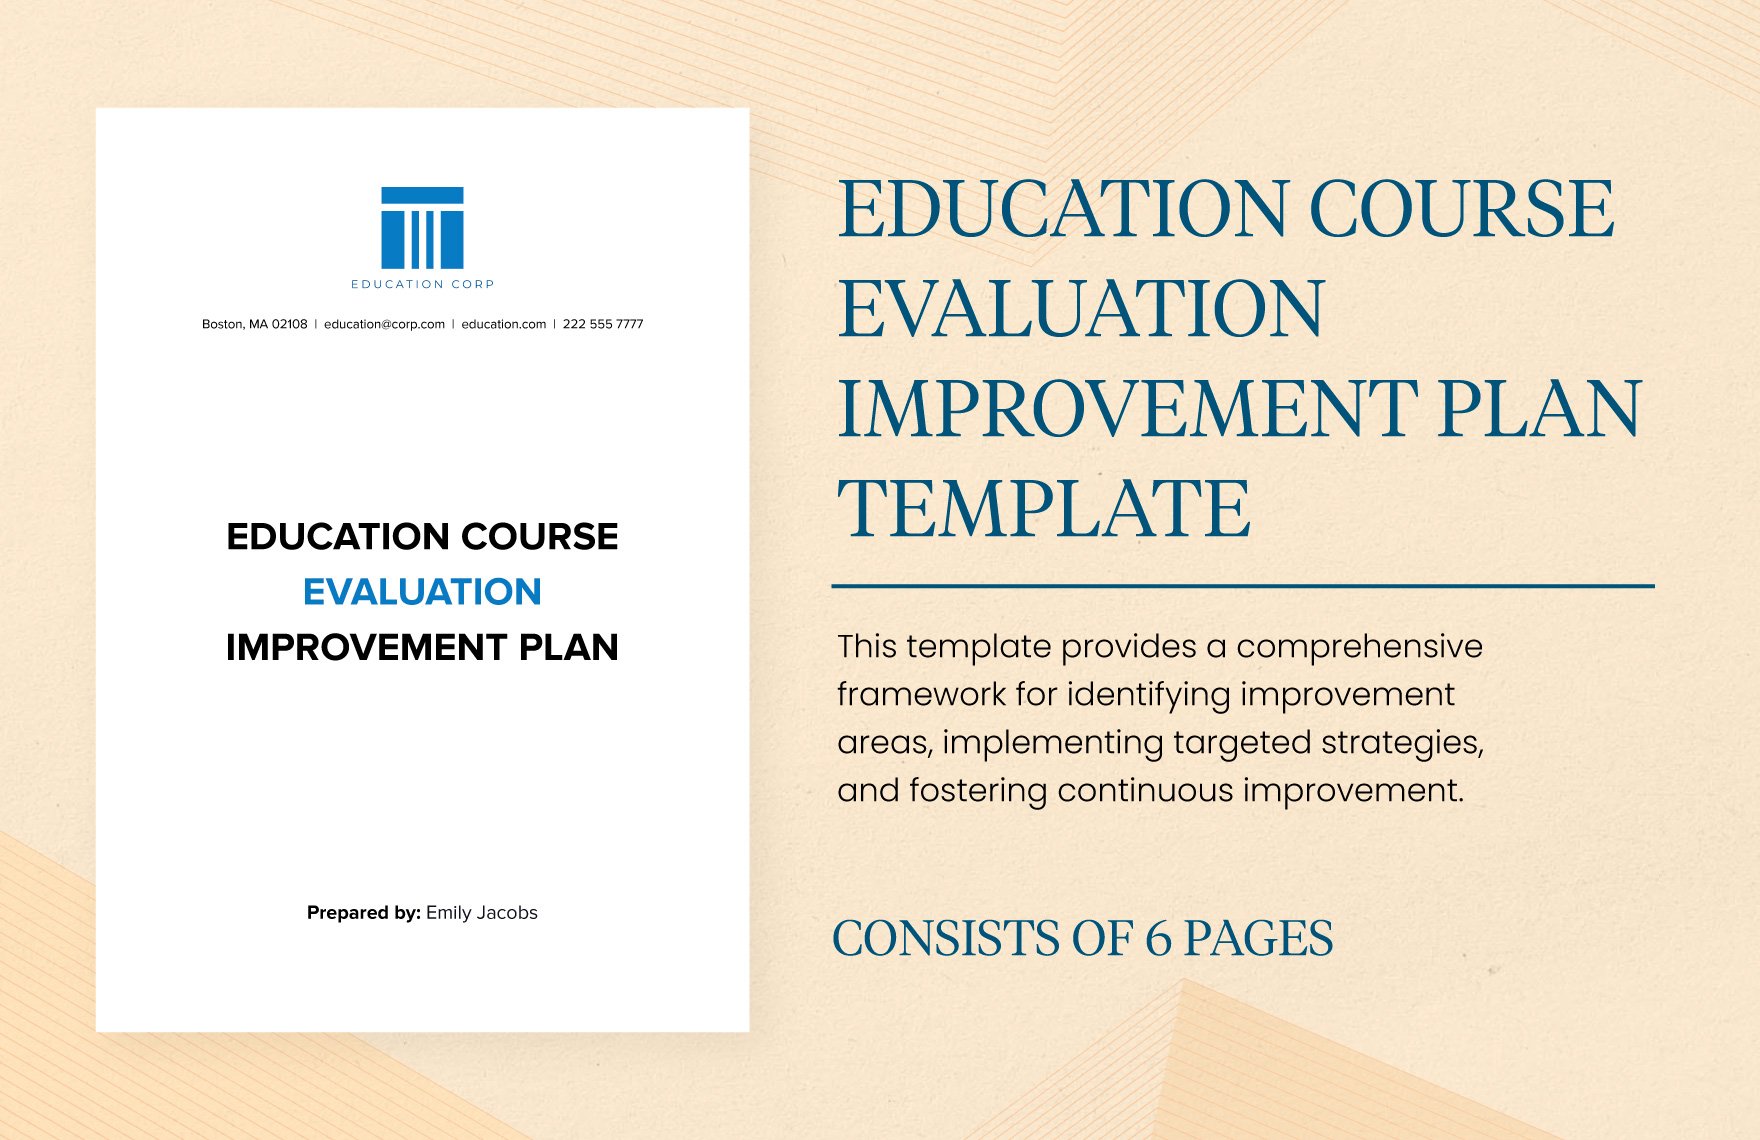 Education Course Evaluation Improvement Plan Template